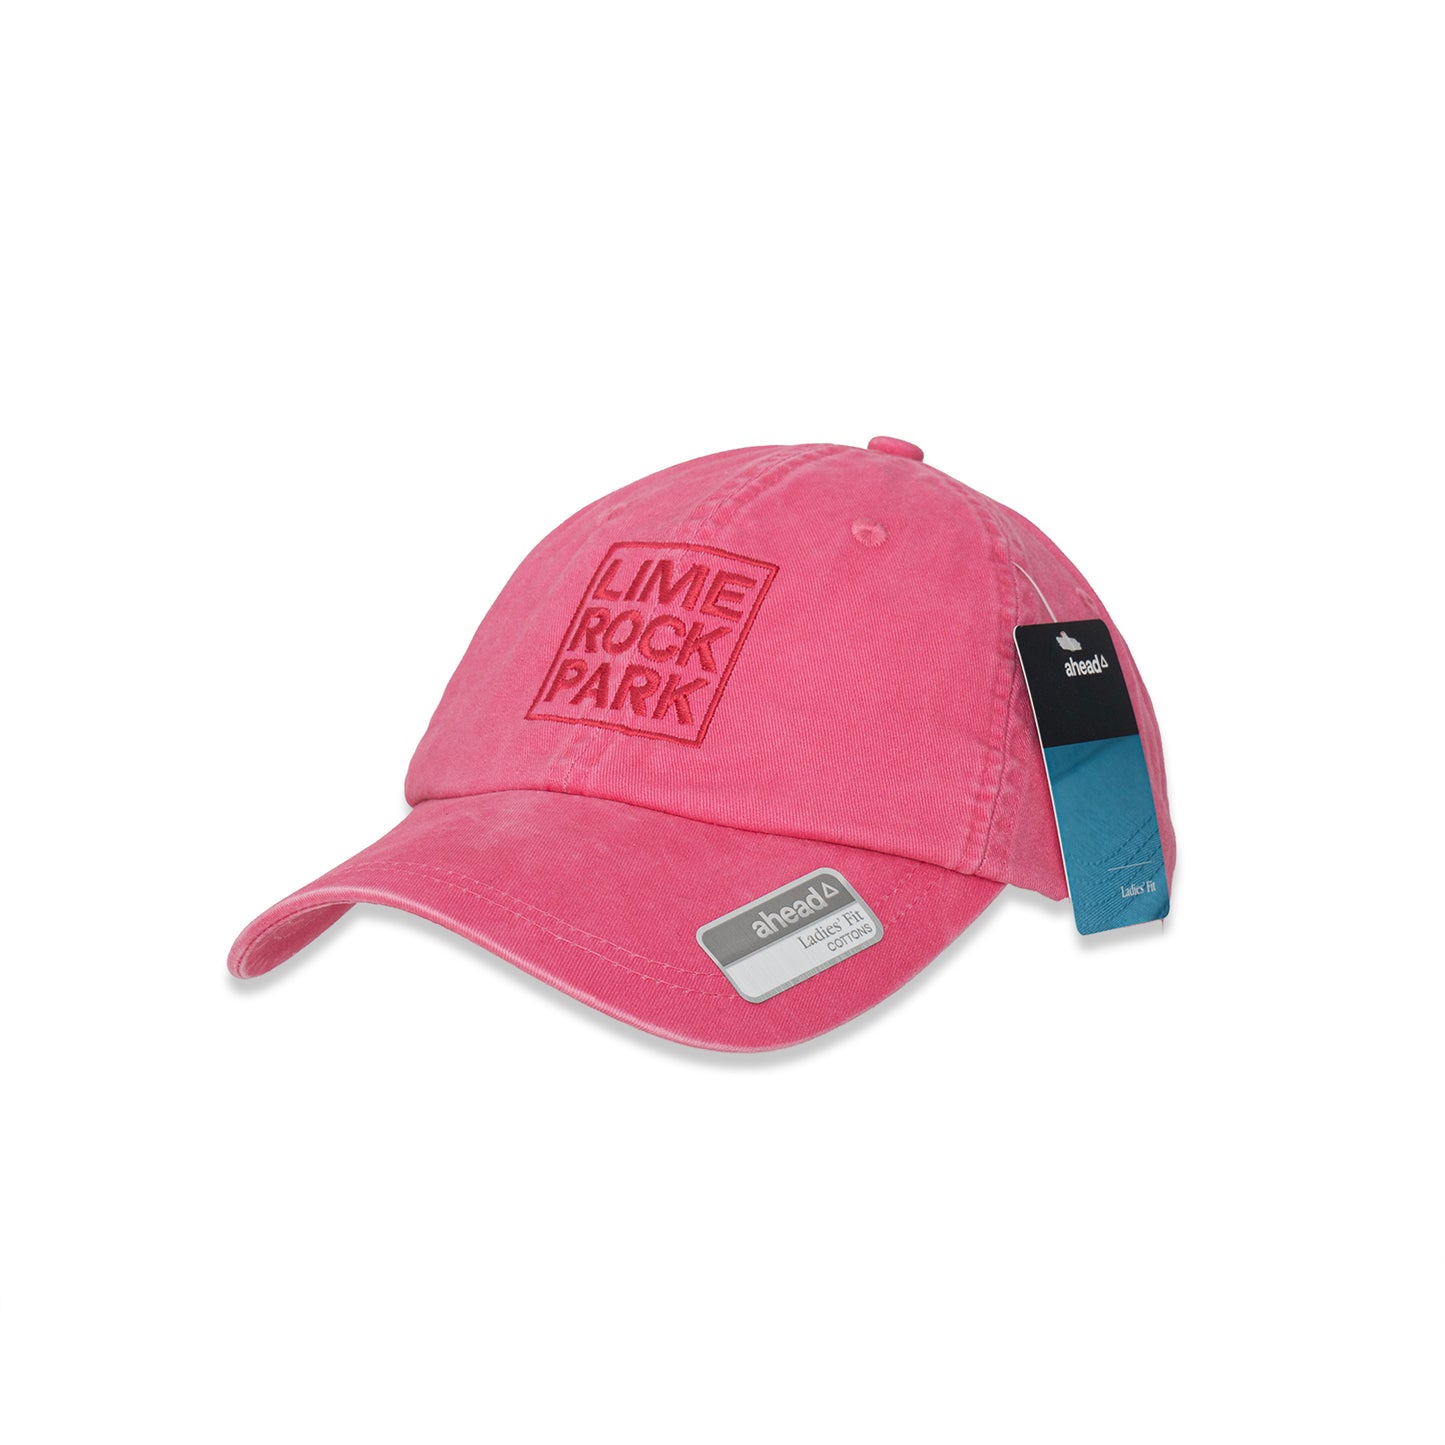 Lime Rock Park Ladies Unstructured Hat - Pink